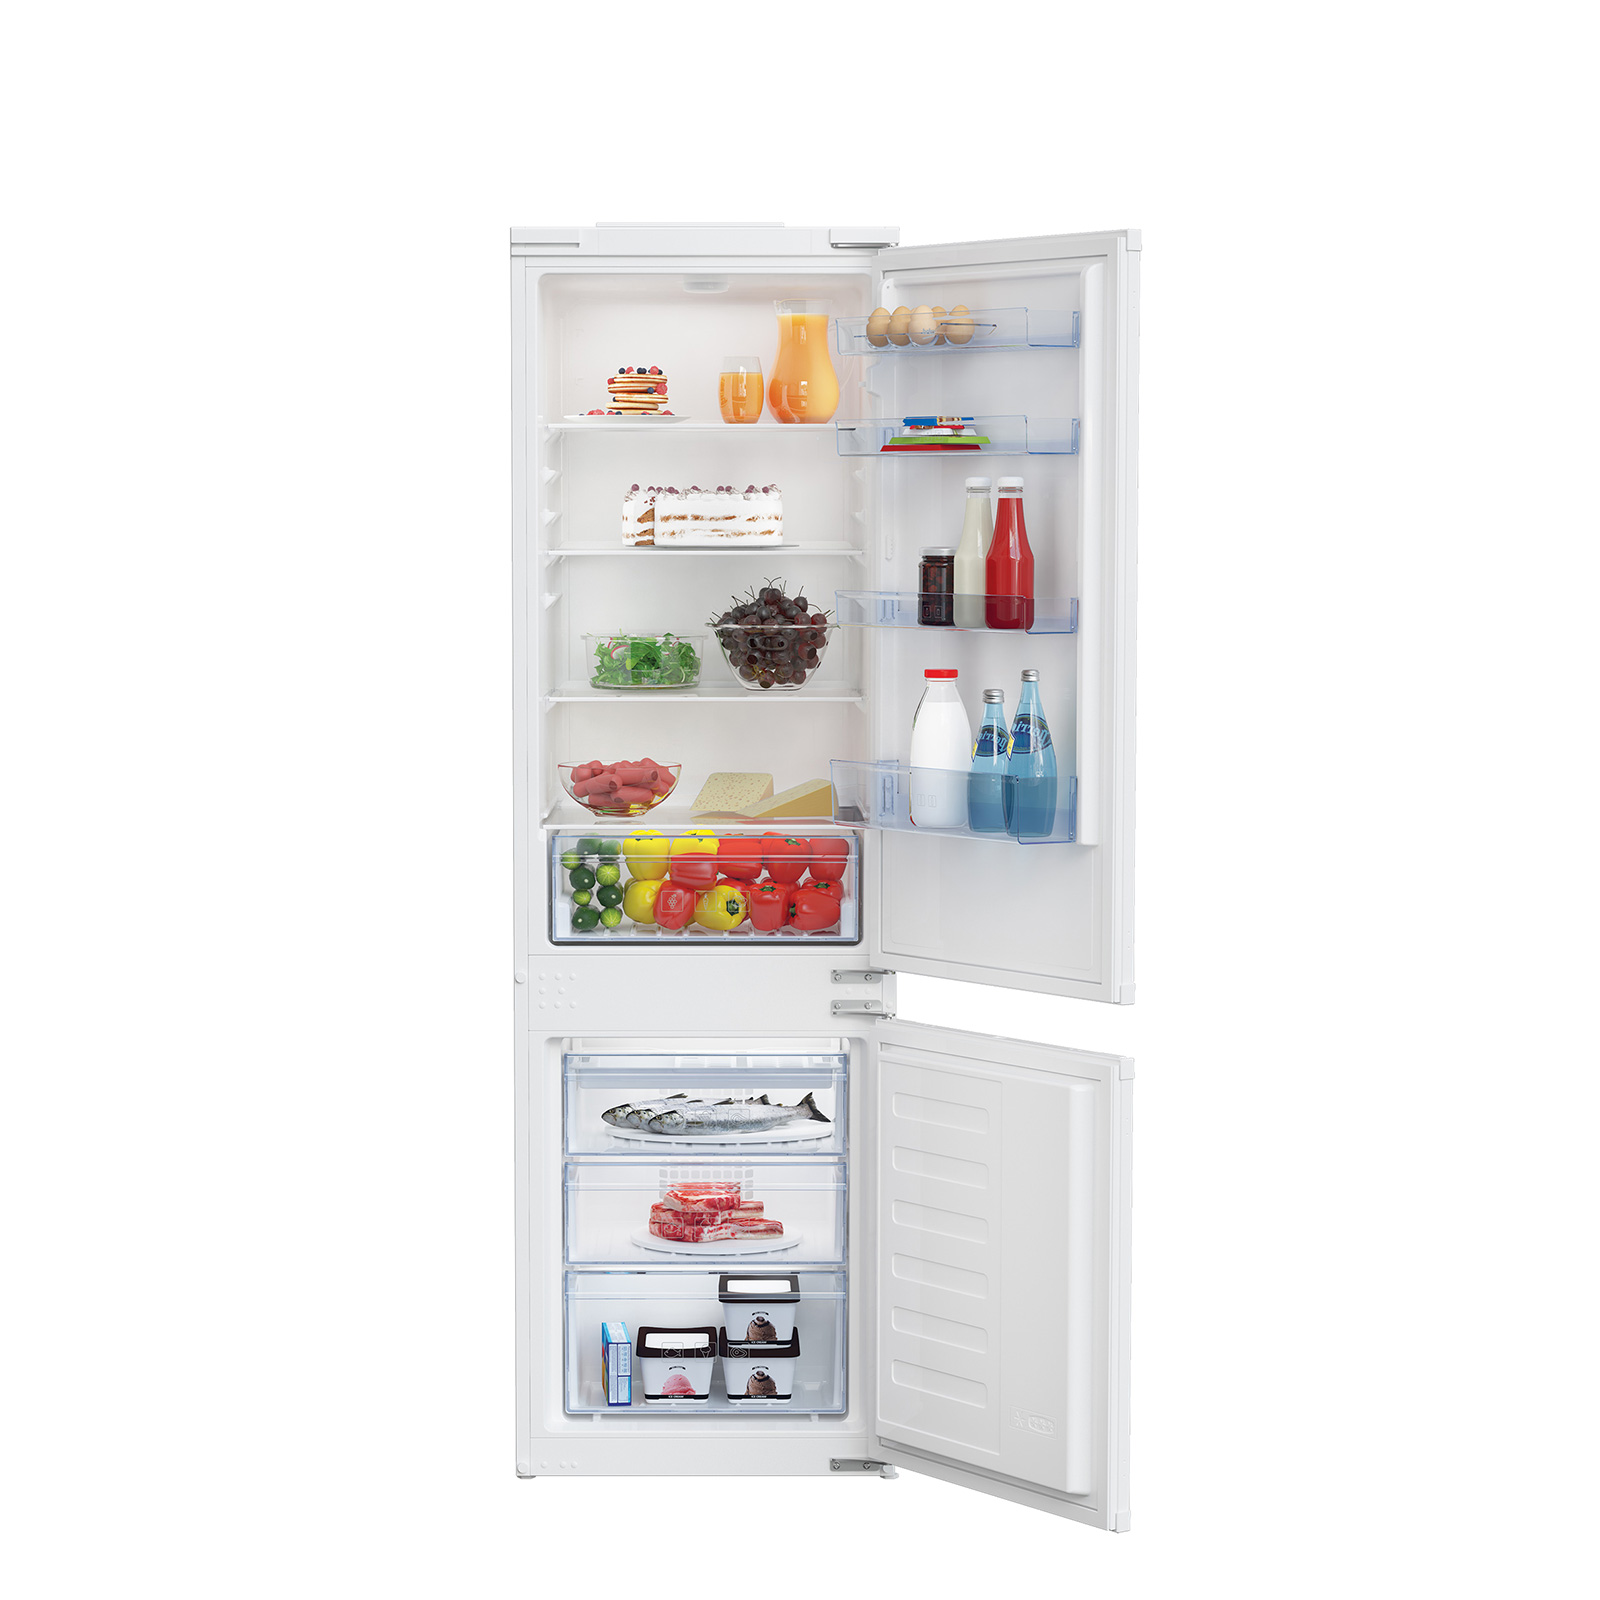 Homecomfort fridges